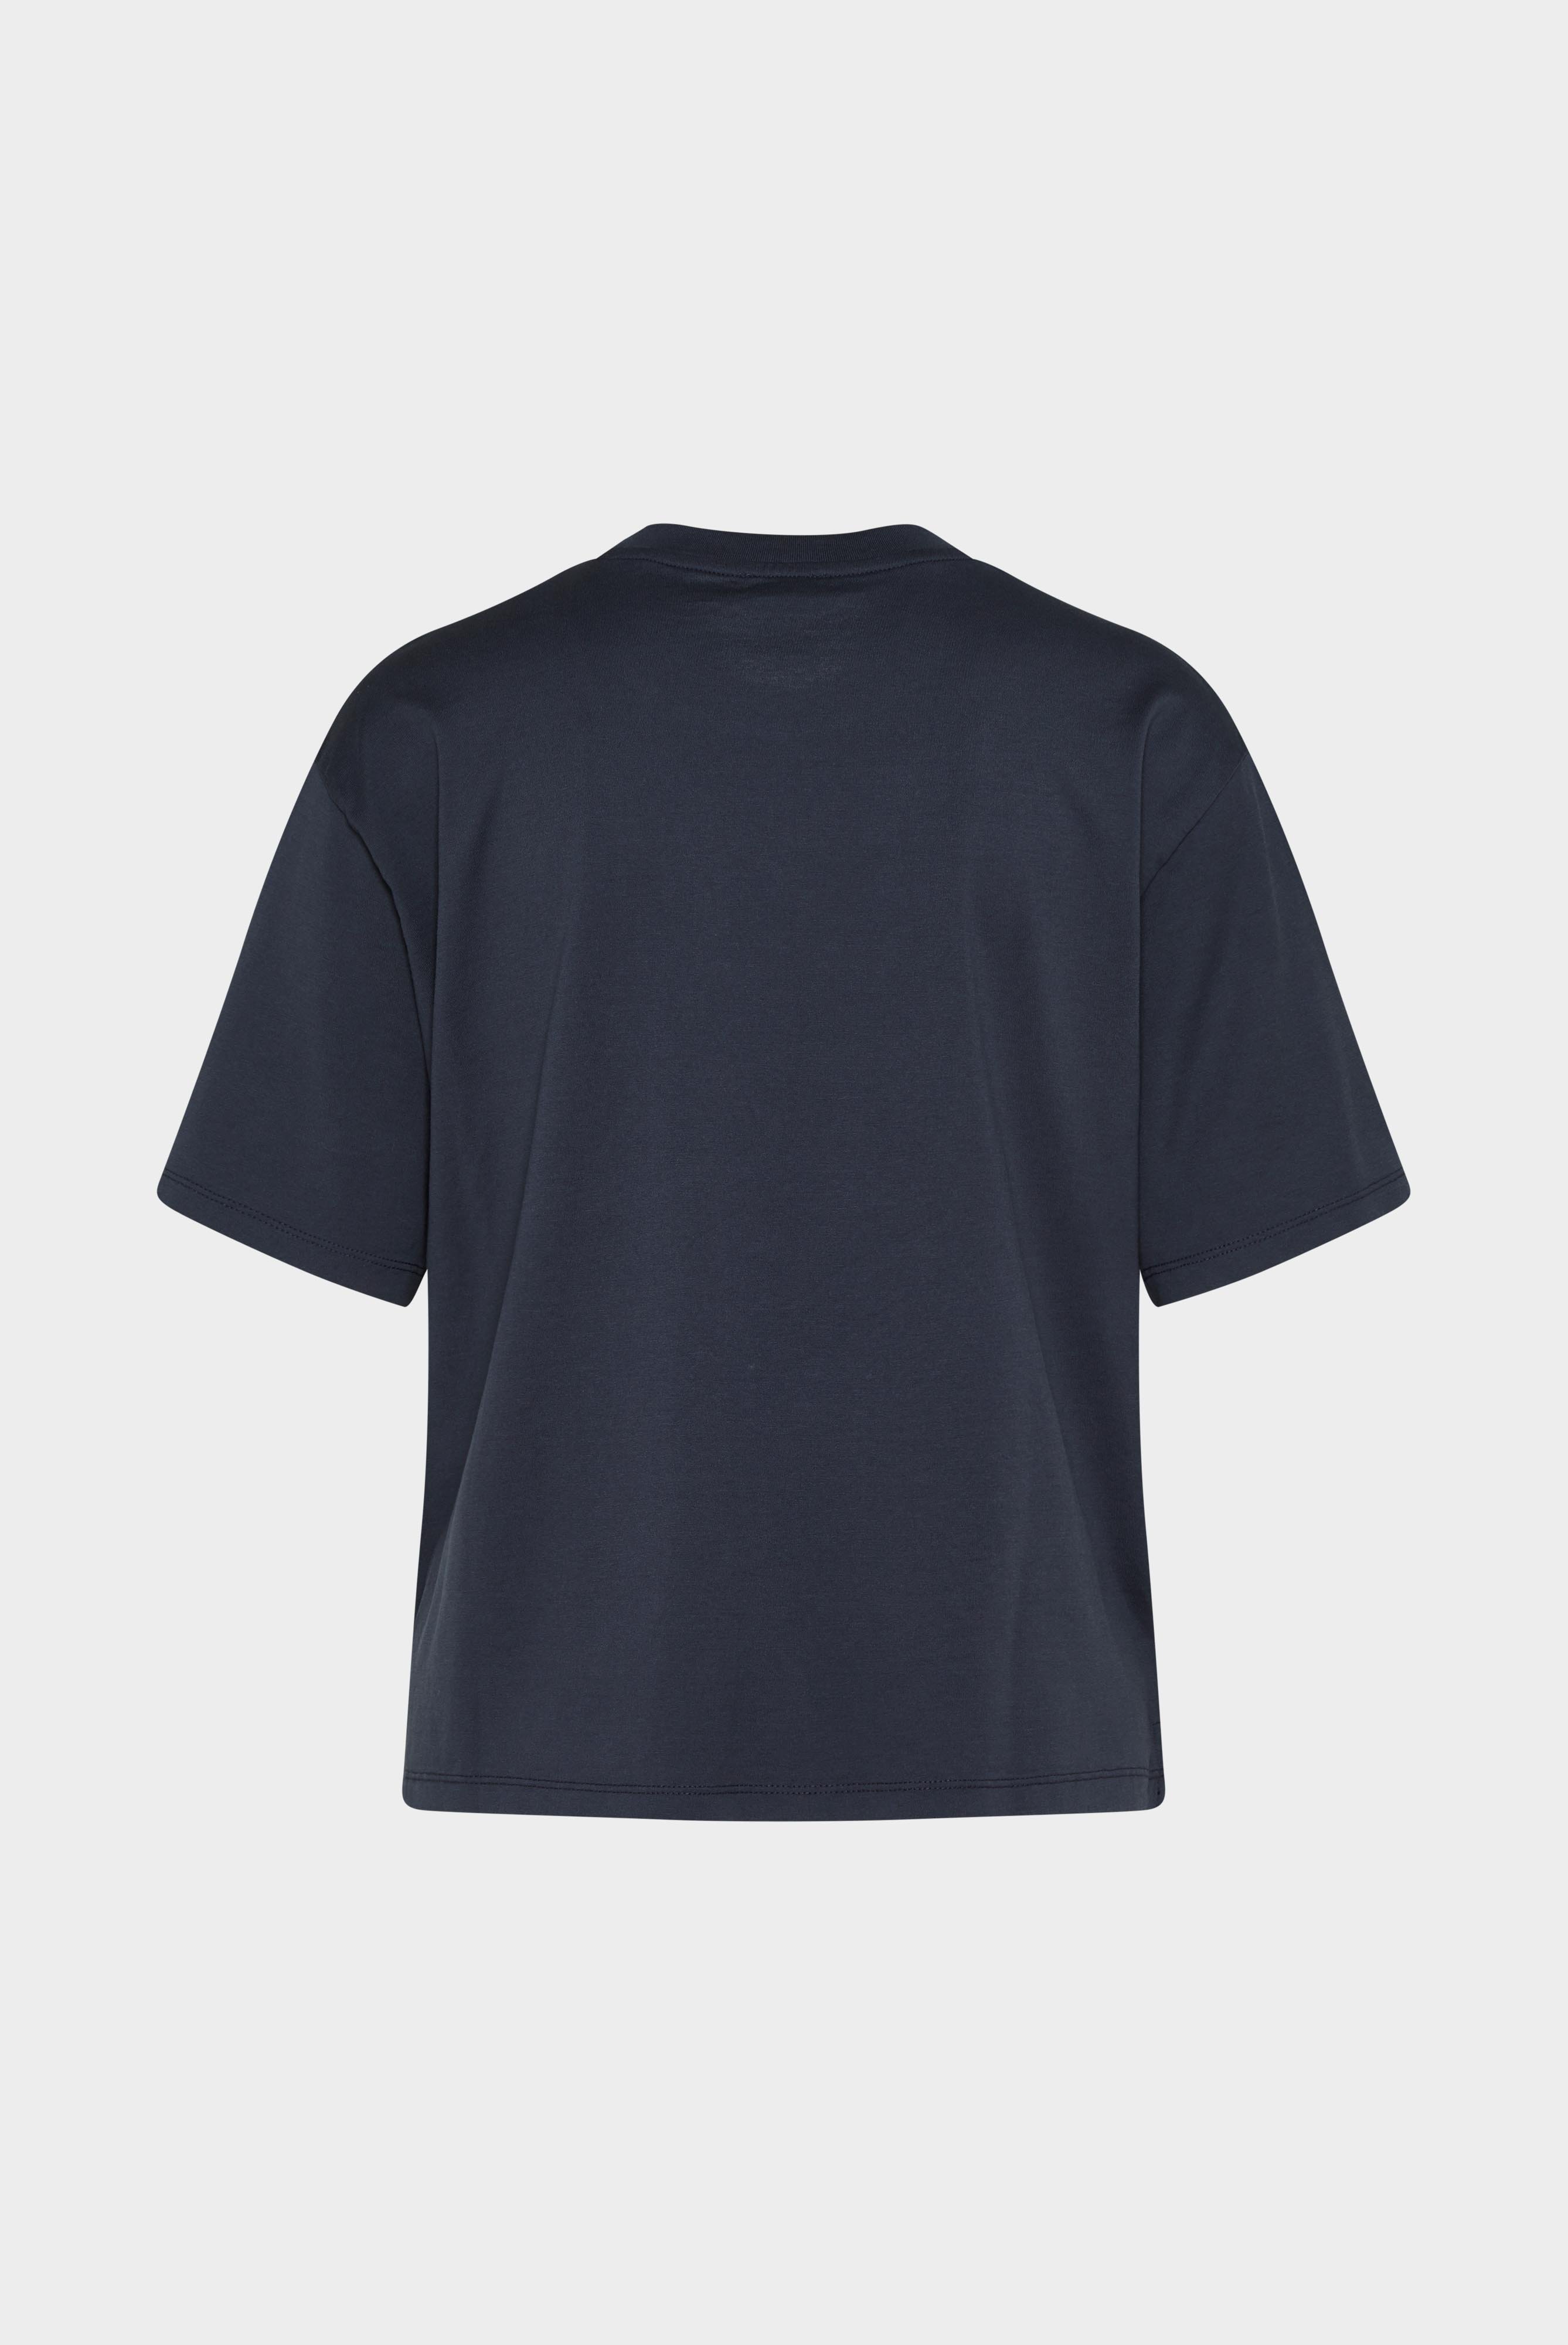 Tops & T-Shirts+Boxy T-Shirt+05.2912..Z20044.790.S